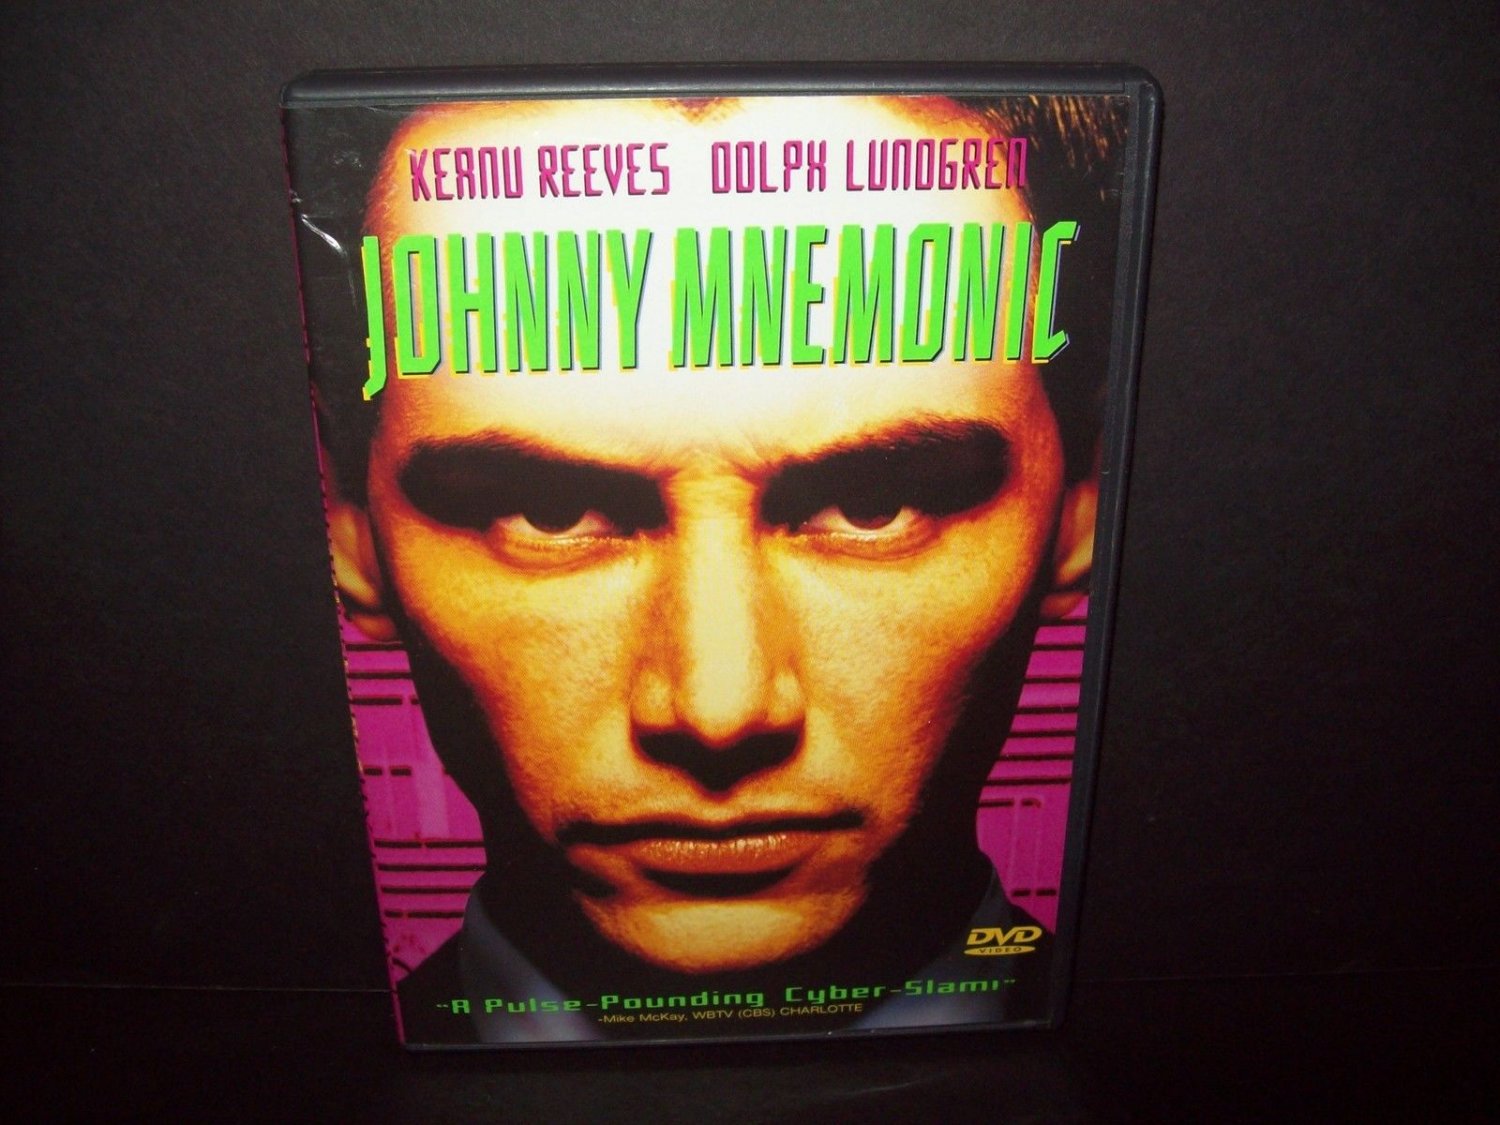 Johnny Mnemonic - DVD - Keanu Reeves - Dolph Lundgren - MINT DISC!